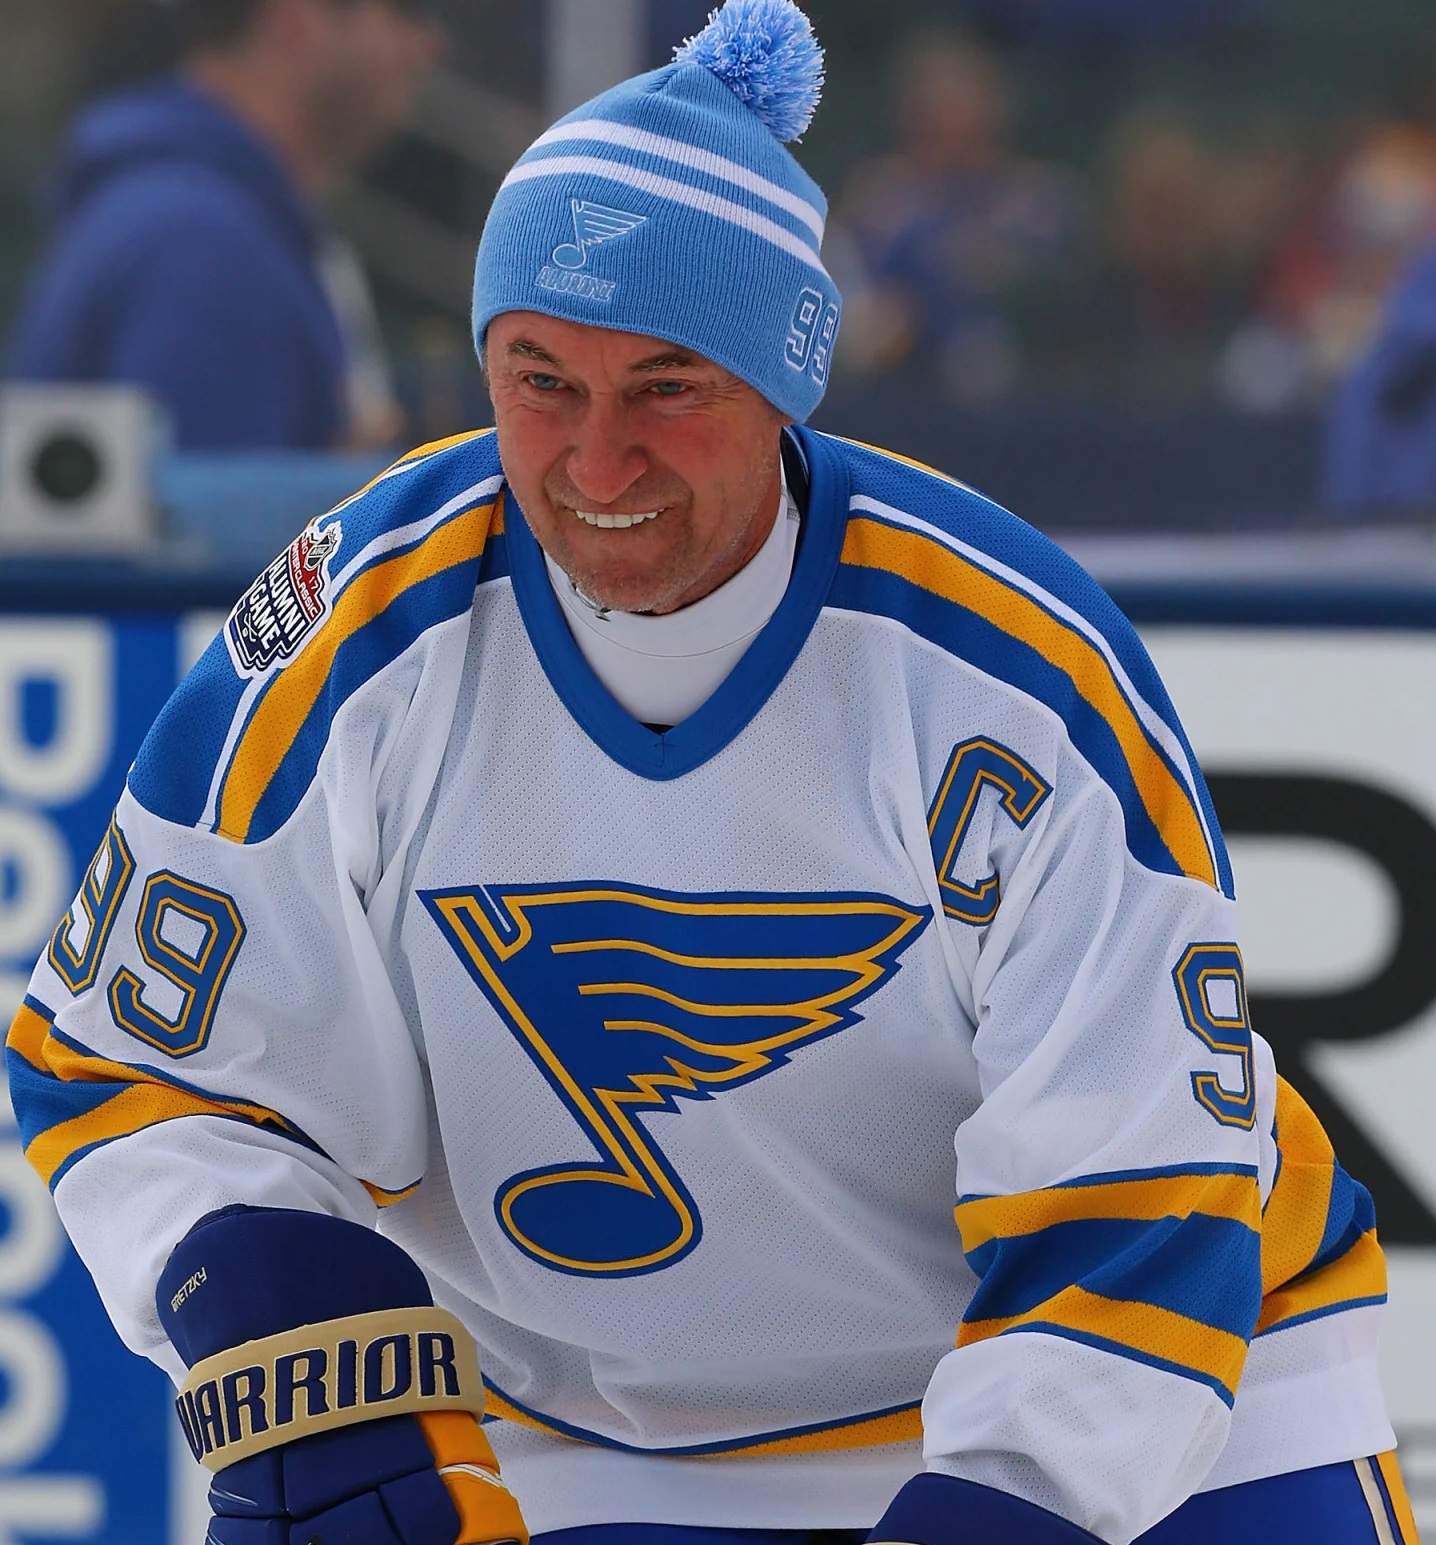 99 Wayne Gretzky St. Louis Blues CCM authentic on ice jersey